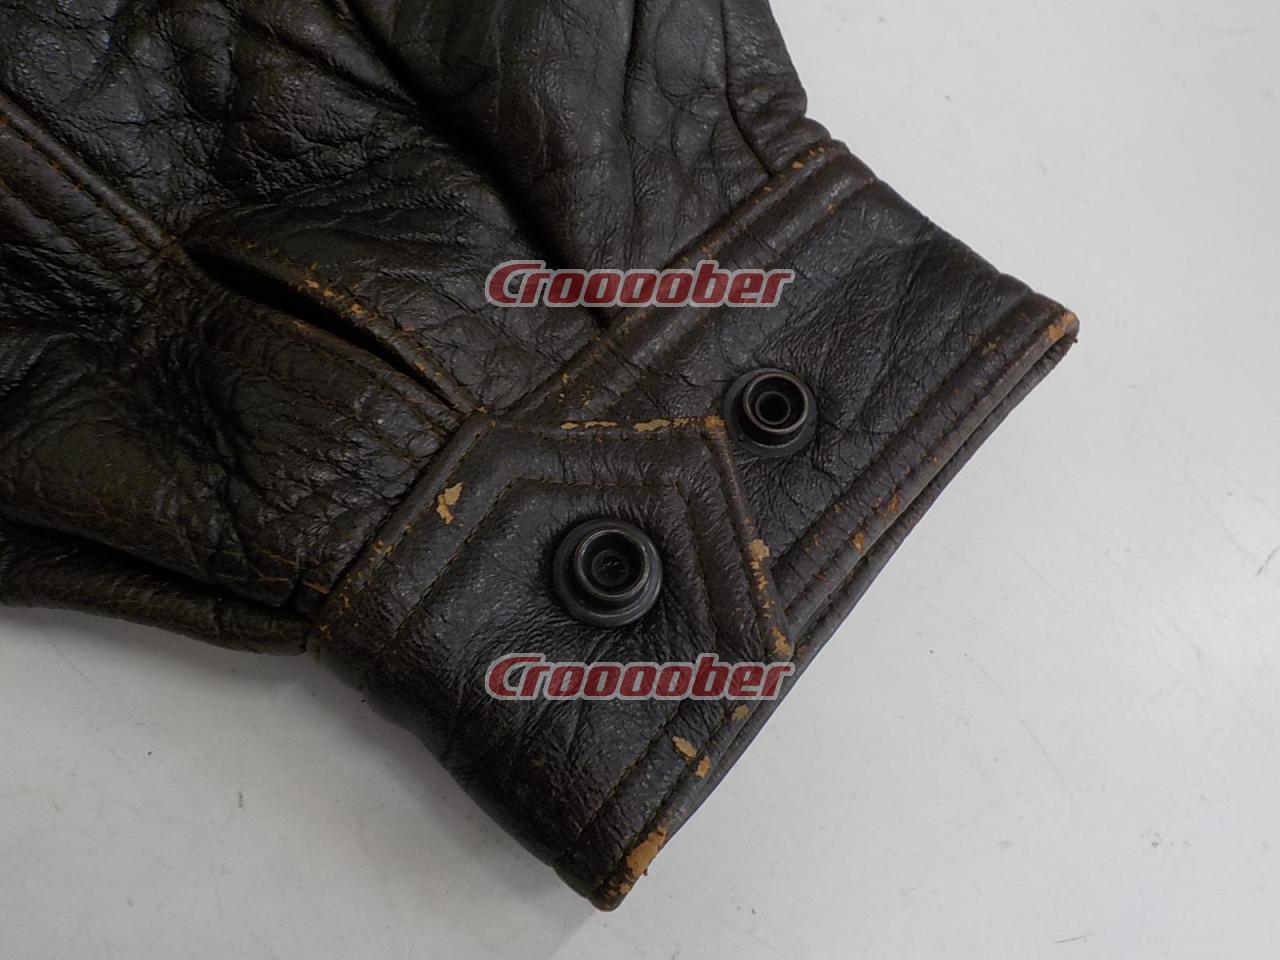 Wind Armor Leather Jacket Size: L | Jackets | Croooober